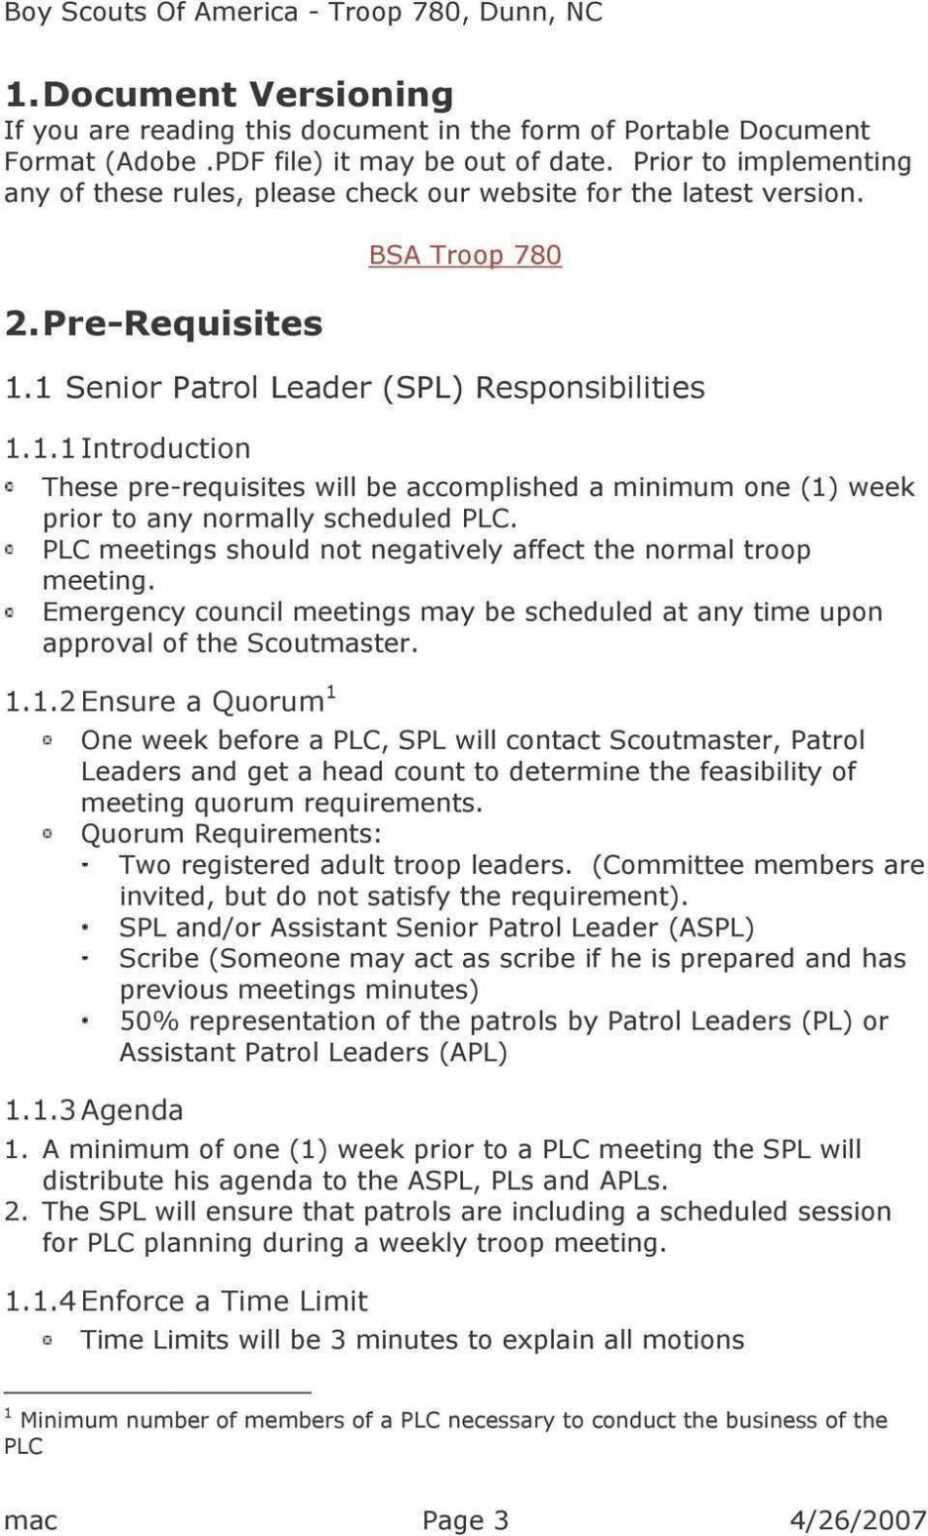 plc agenda template